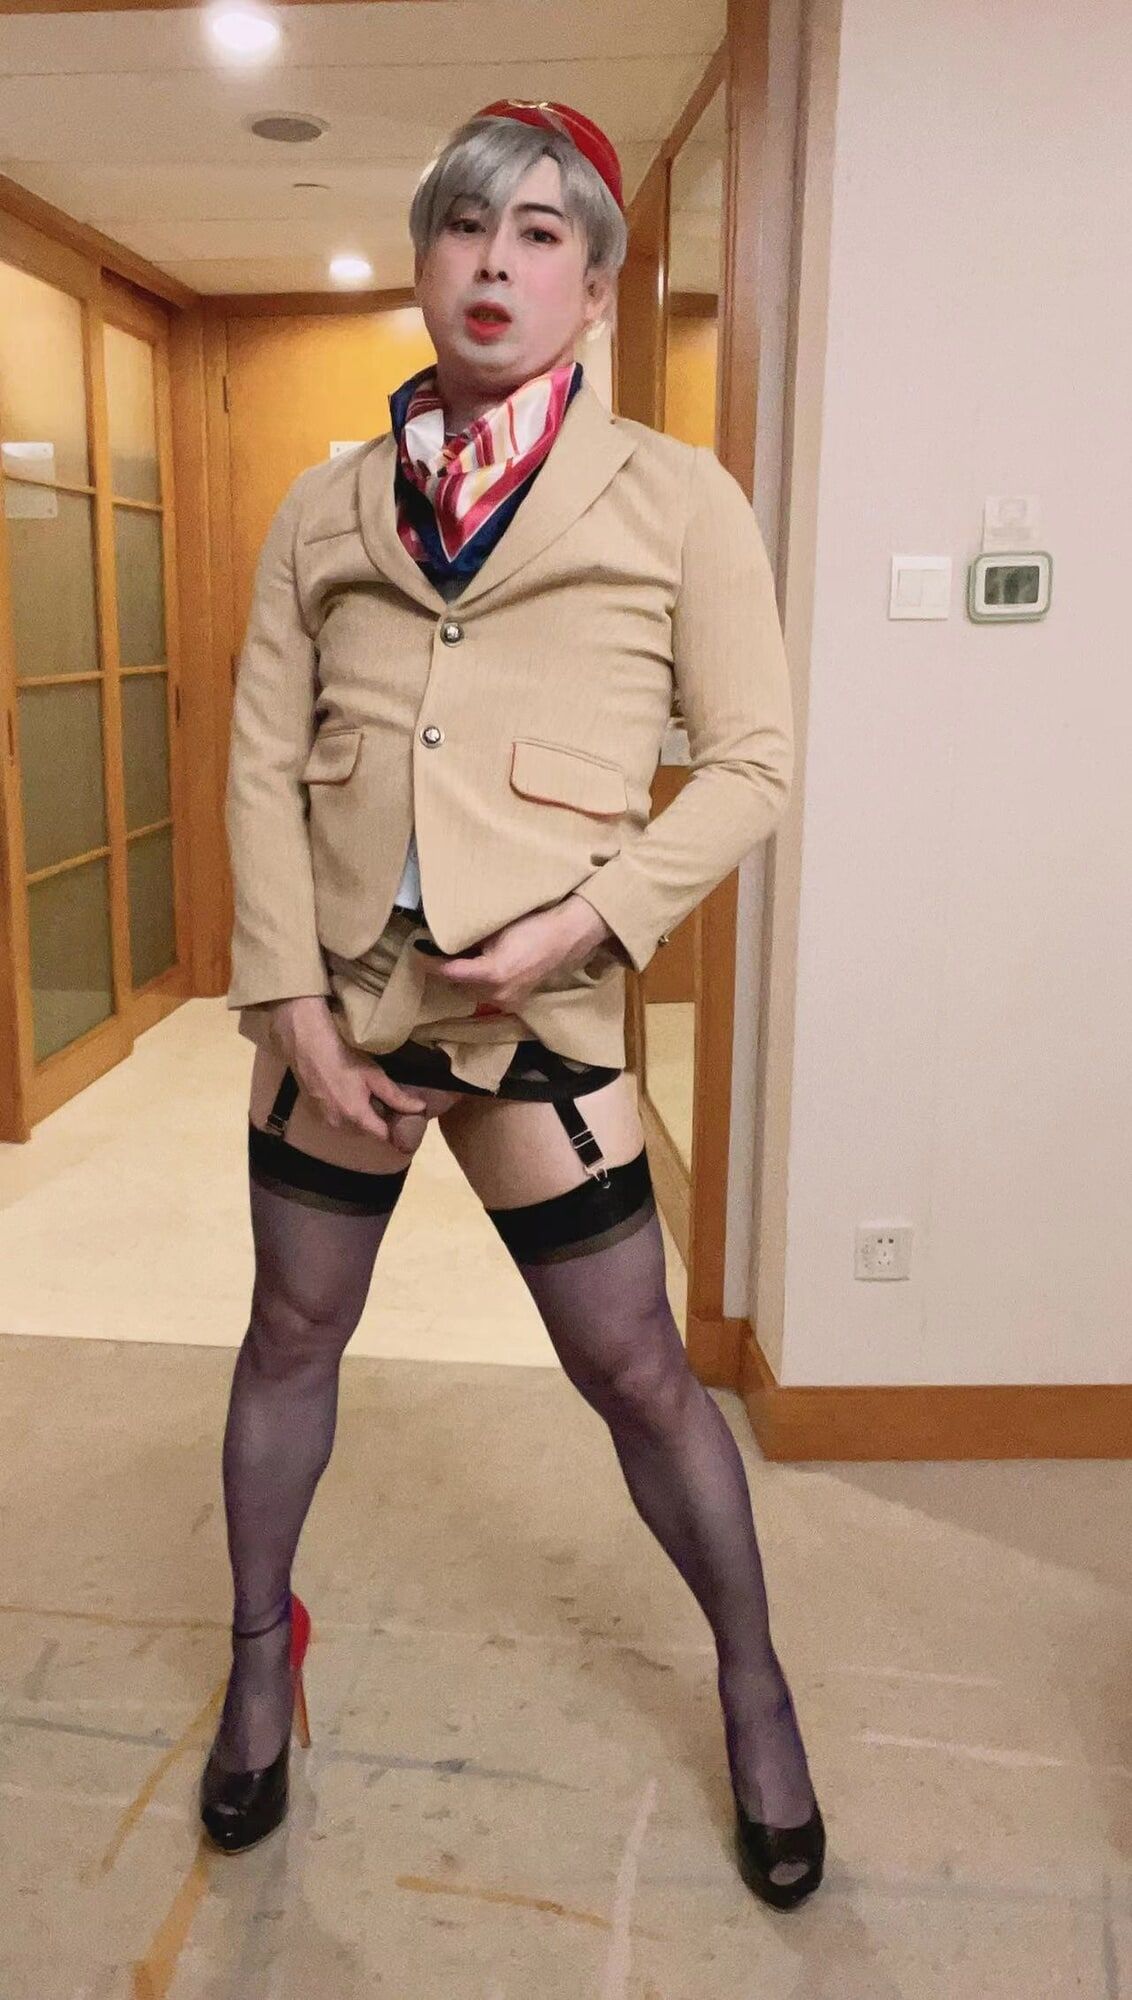 Asian femboy sissy in Emirates flight attendant dress #21